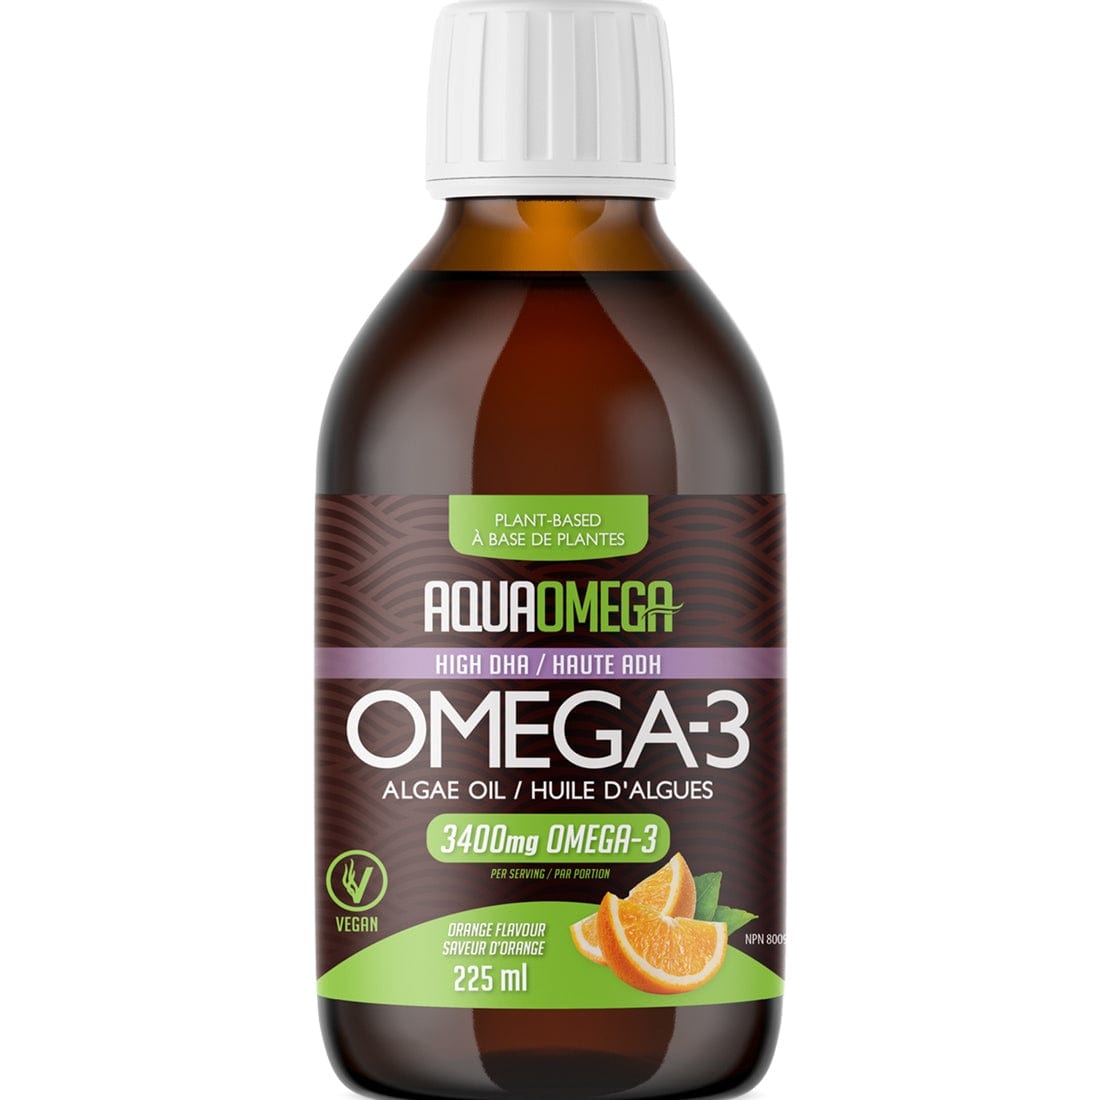 AquaOmega Vegan Algae Oil Omega 3 Liquid, High DHA